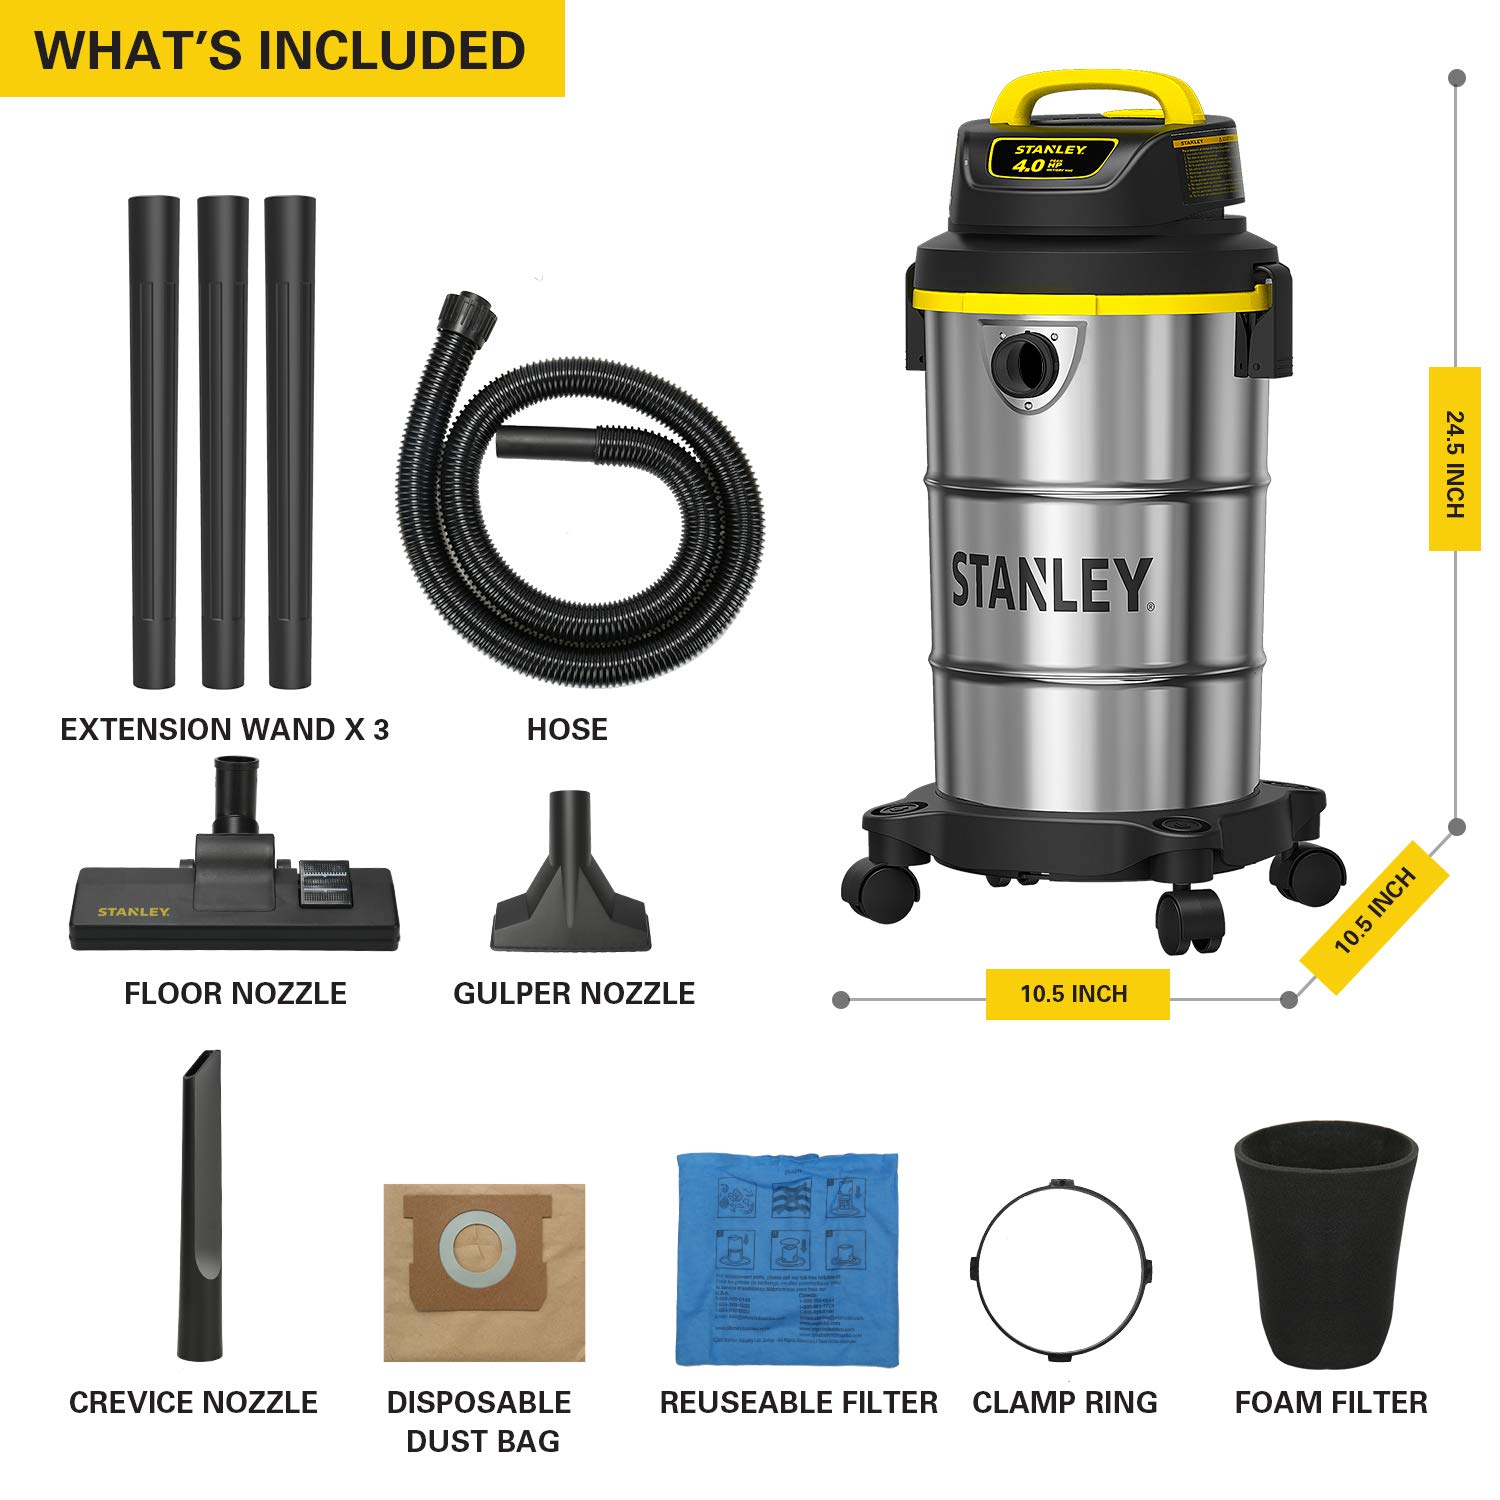 Stanley Wet/Dry Vacuum, 5 Gallon, 4 Horsepower, Stainless Steel Tank - Silver+yellow+black - SL18130